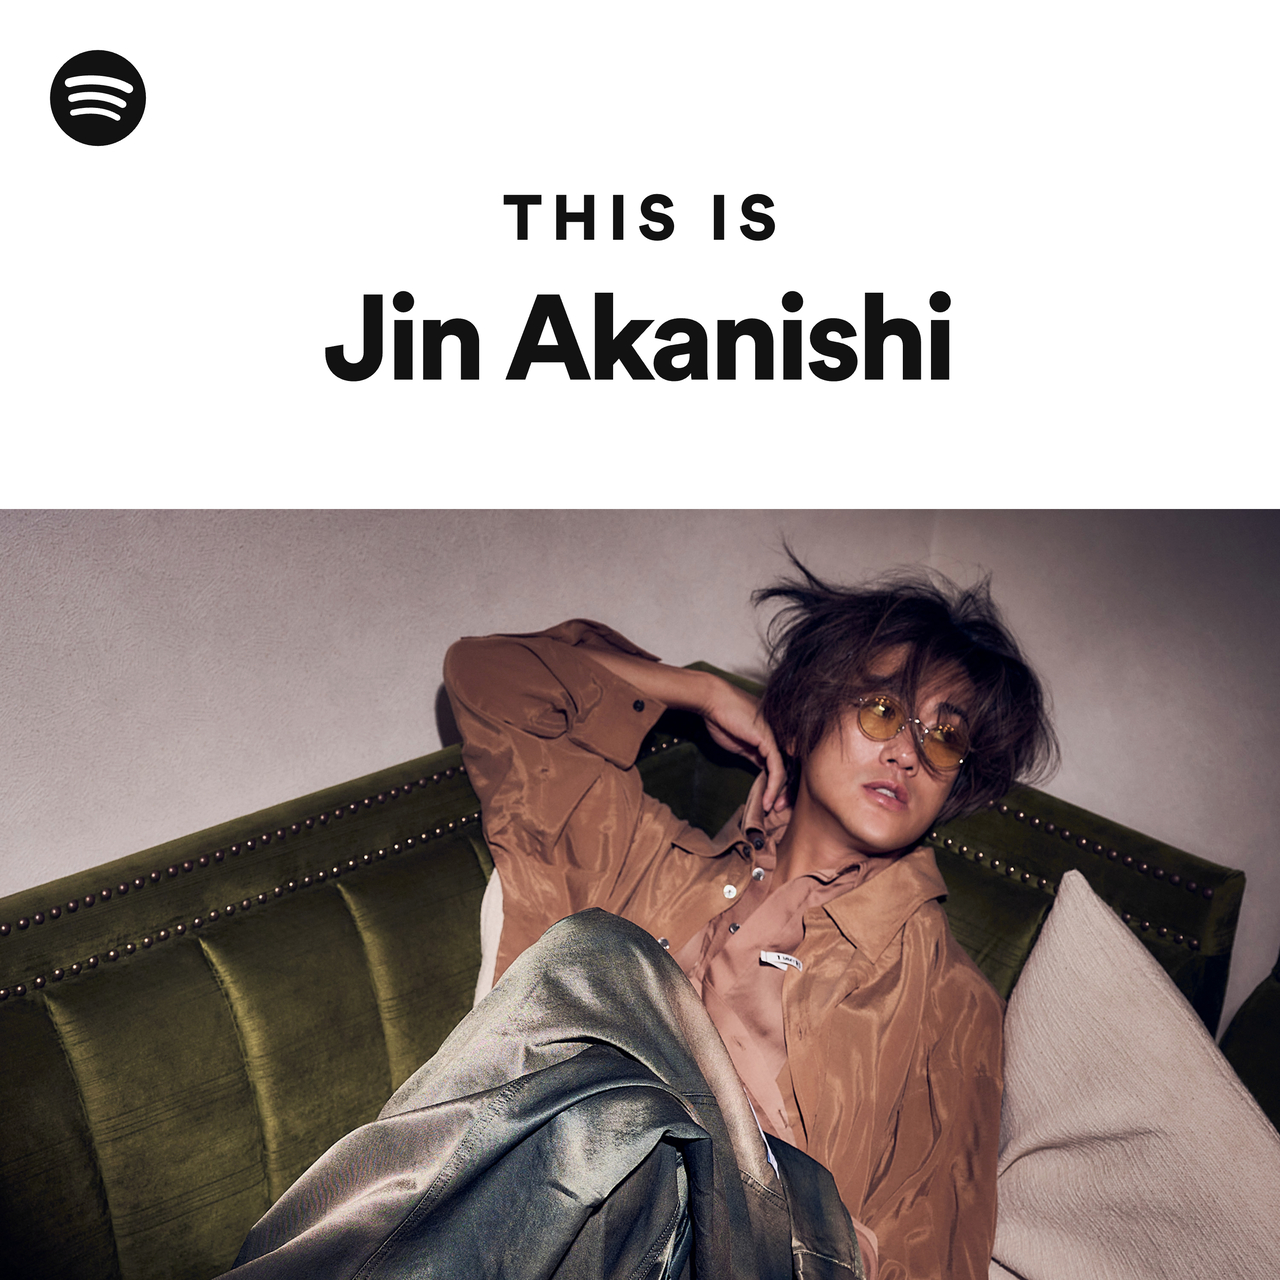 This Is Jin Akanishi